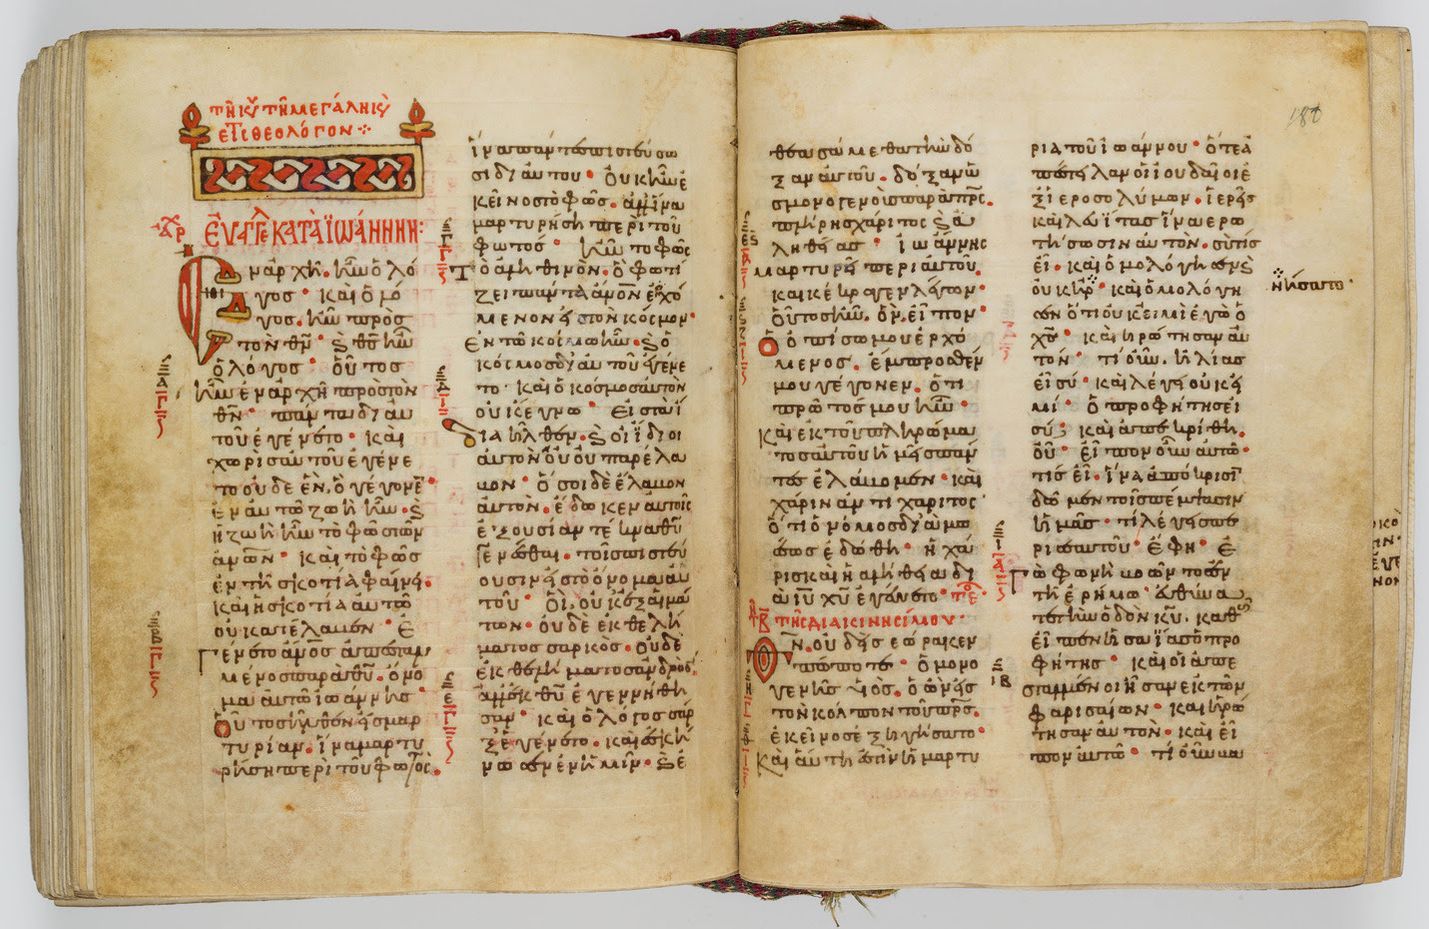 Museum of the Bible returns stolen manuscript to Greek monastery